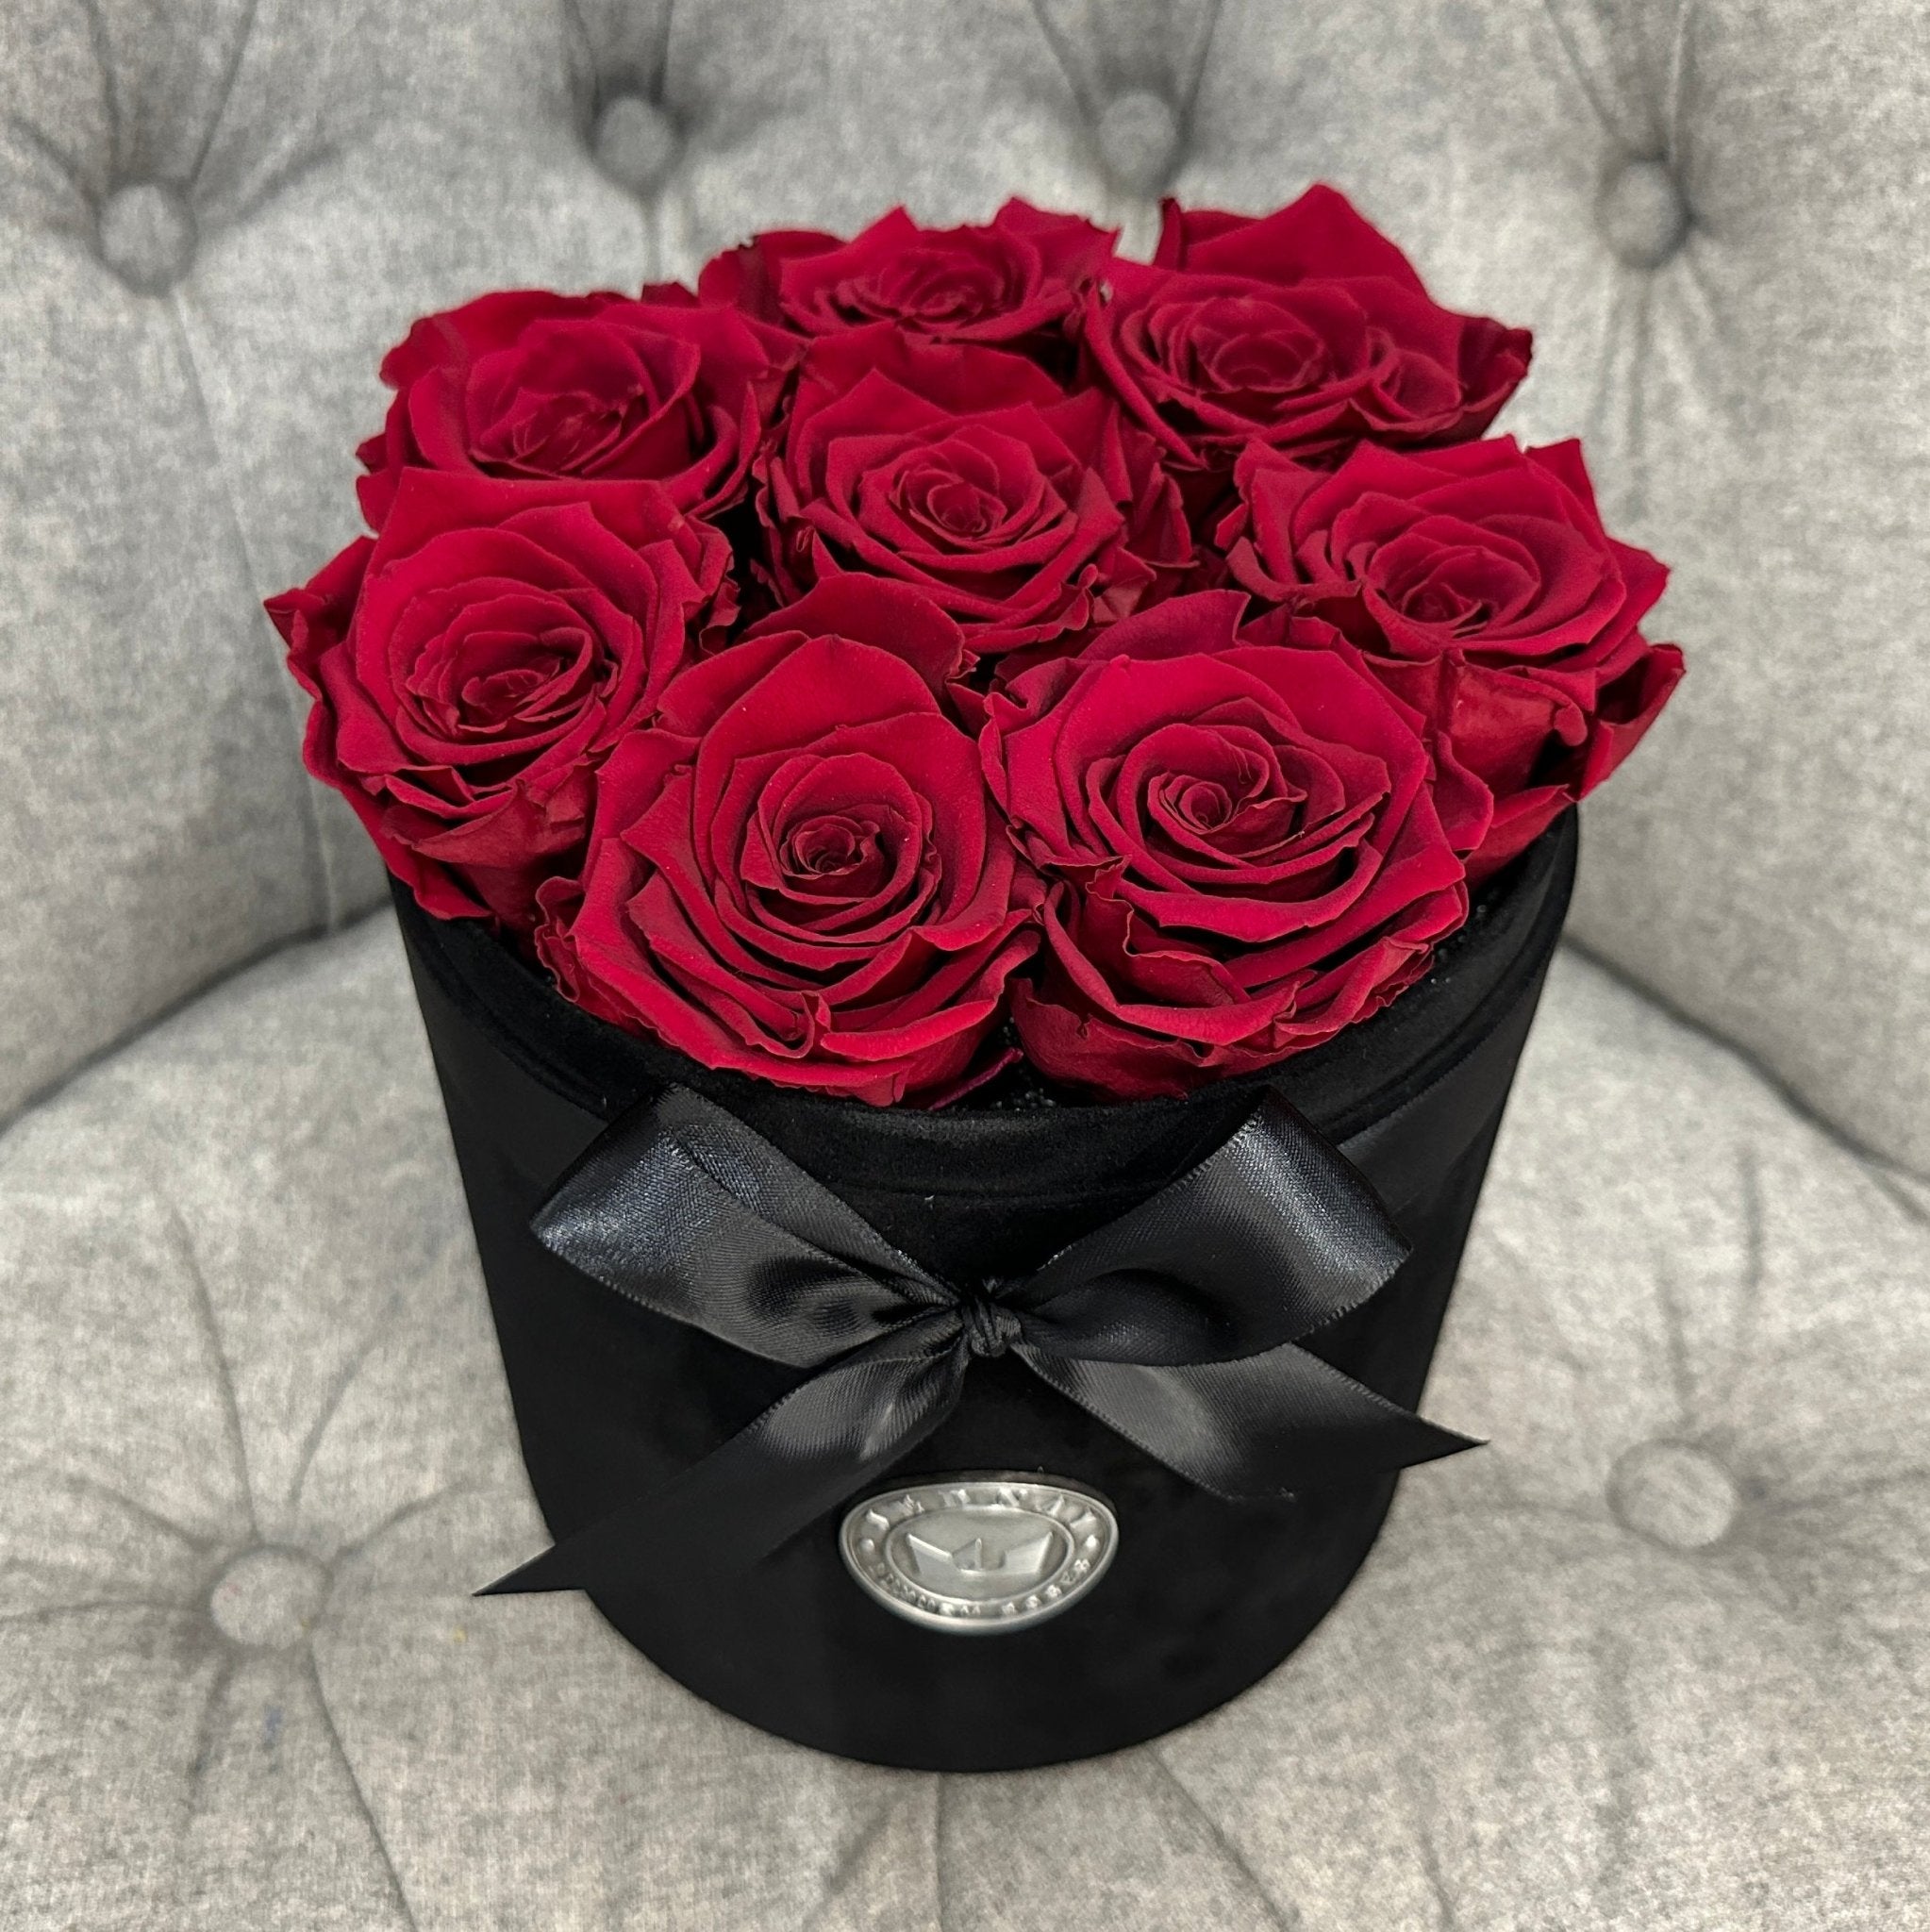 Medium Black Suede Forever Rose Box - Red Red Wine Eternal Roses - Jednay Roses